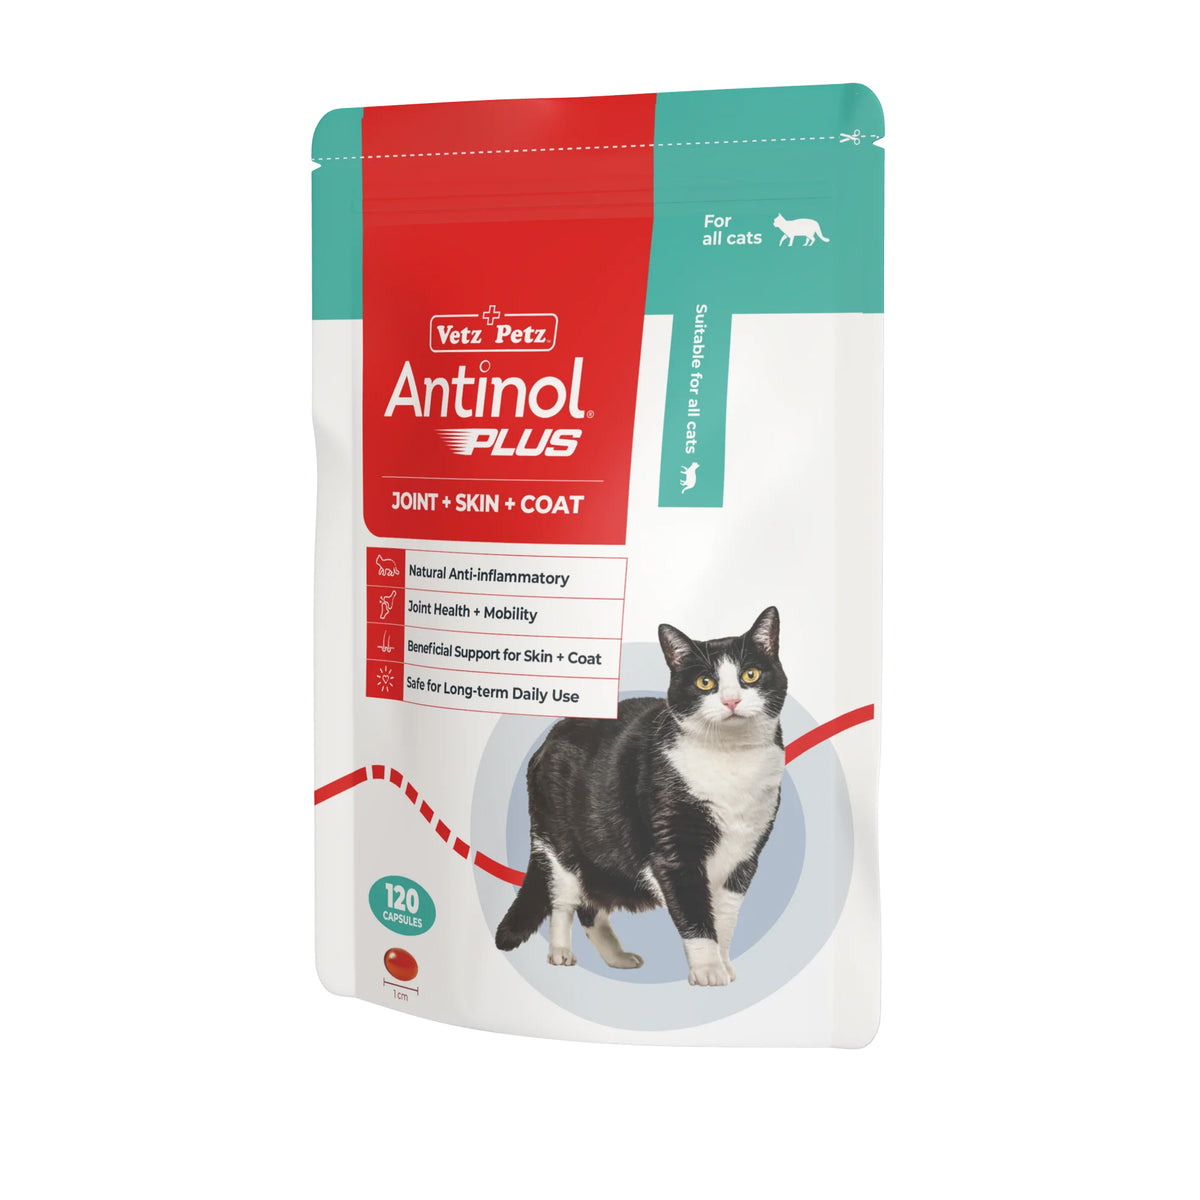 Antinol Plus for Cats